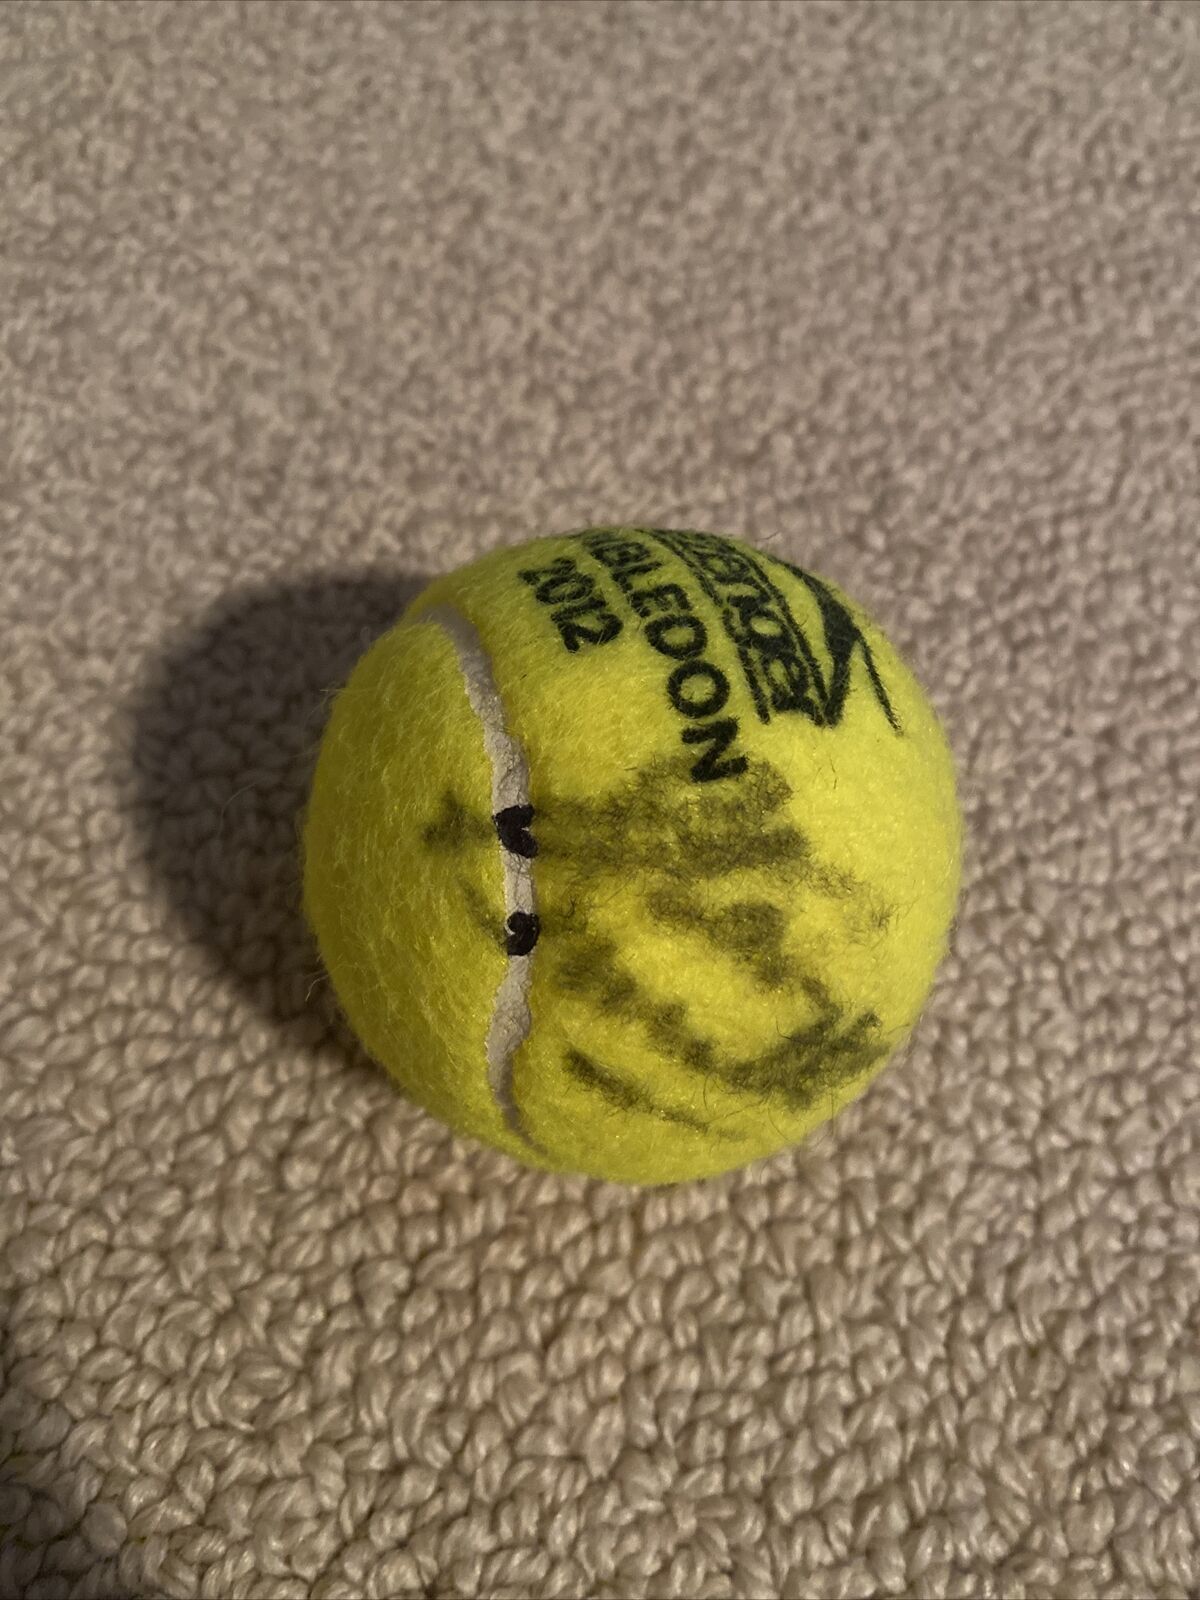 Tennis Legend Stan Smith Signed Wimbledon Tennis Ball Autographed